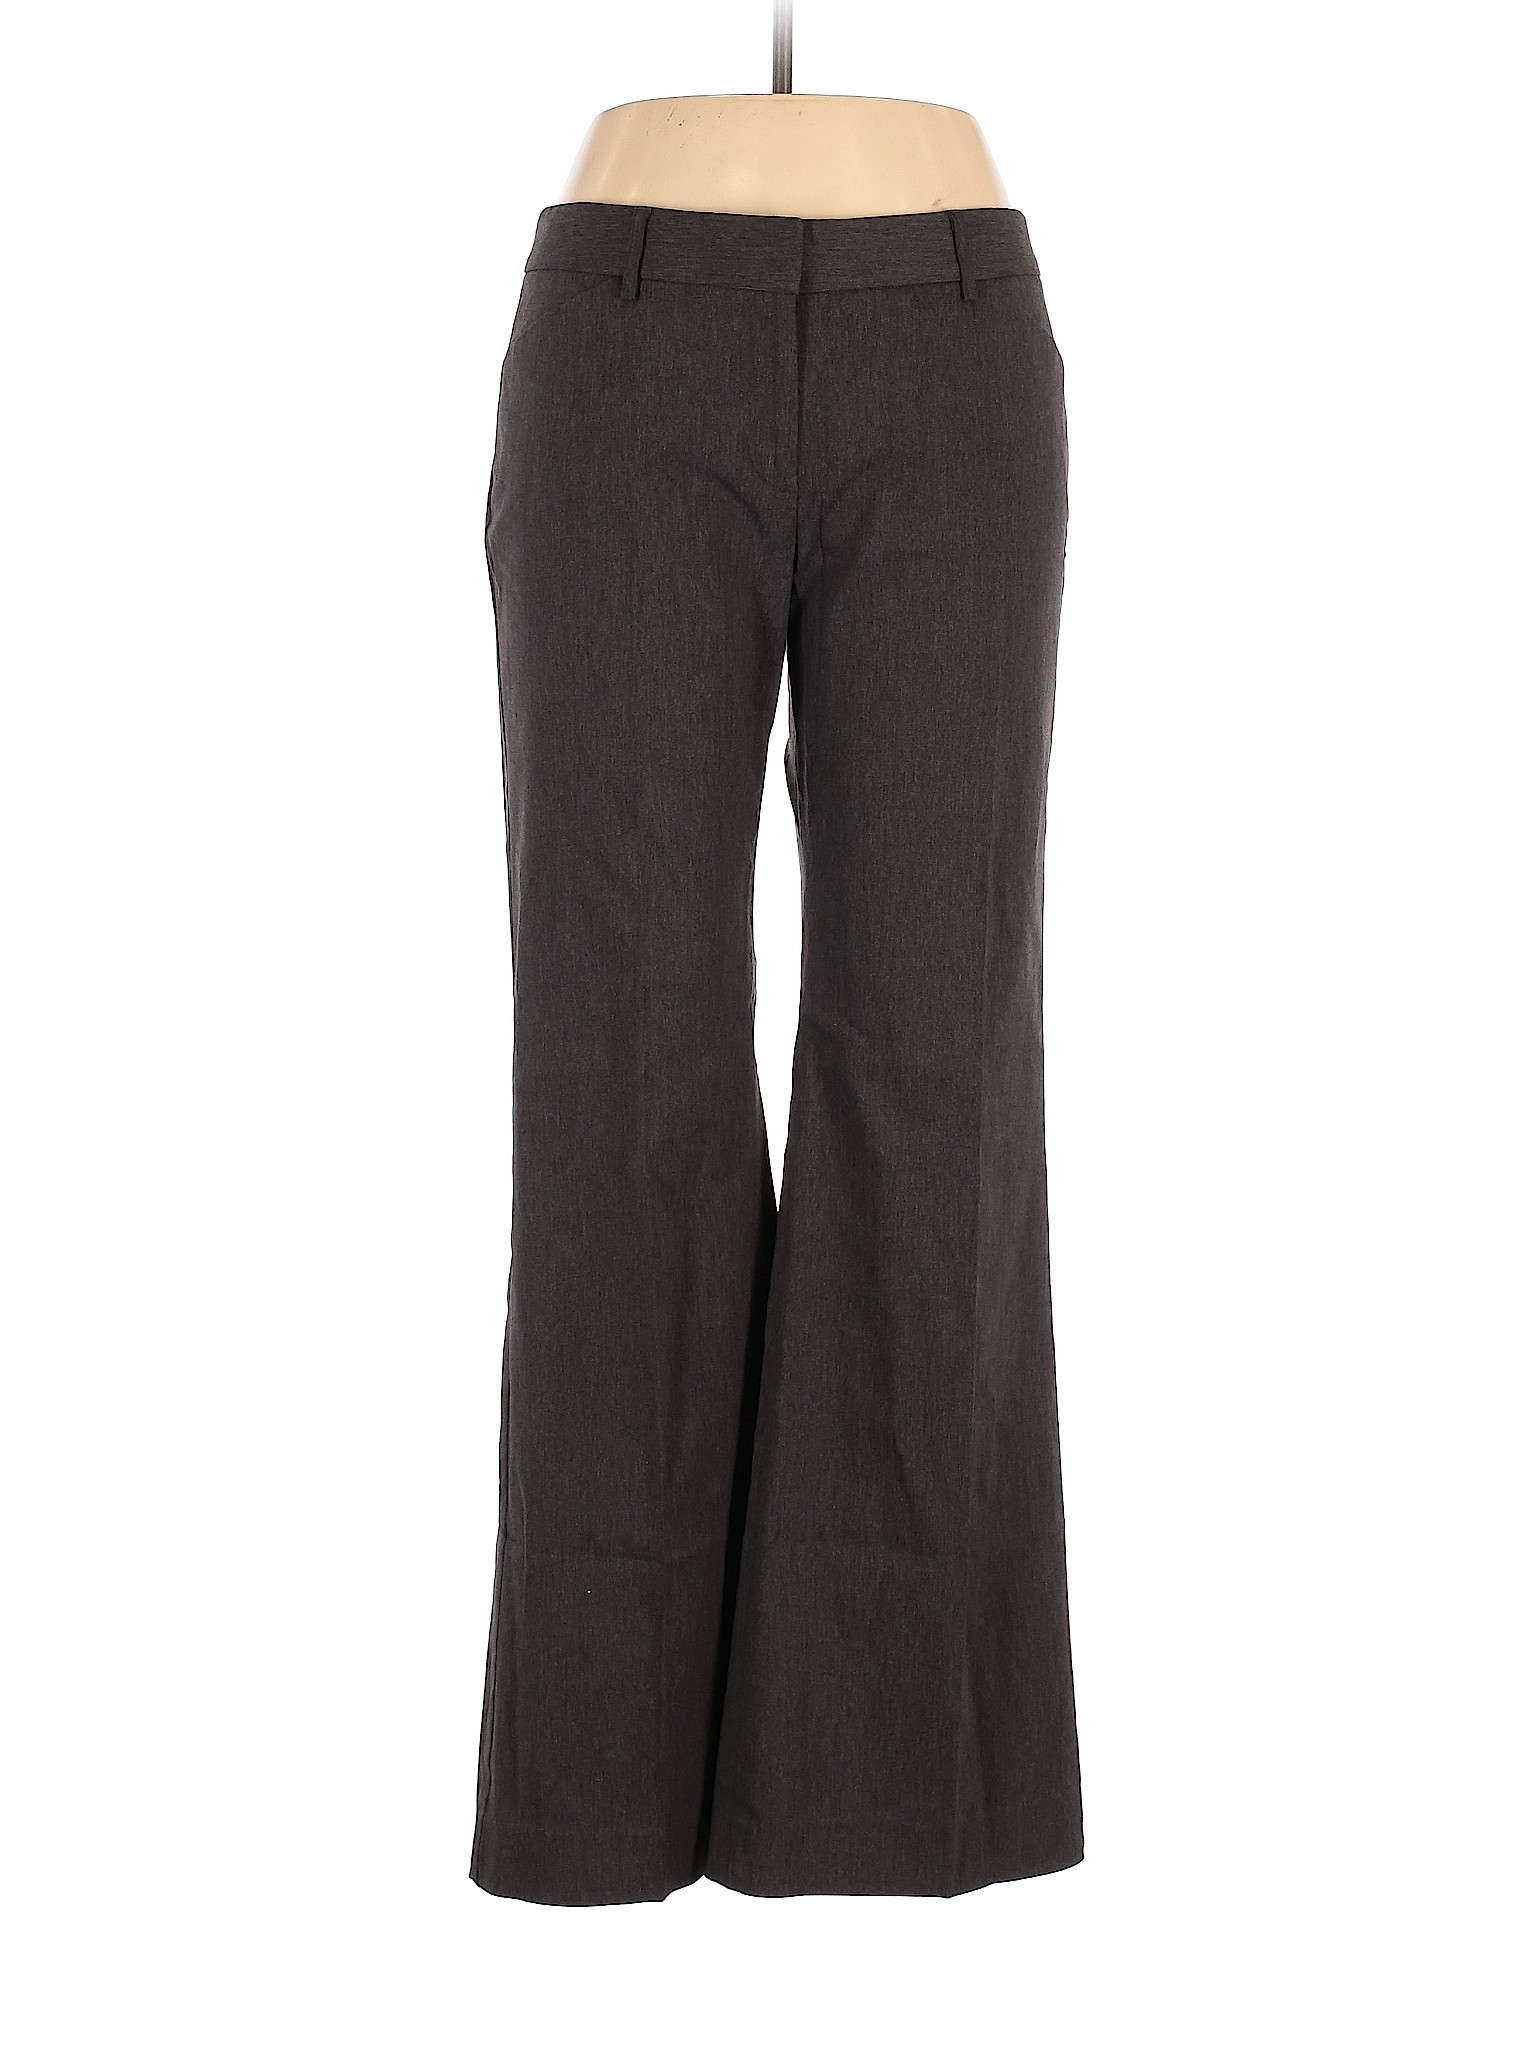 Express Design Studio Women Brown Dress Pants 10 | eBay